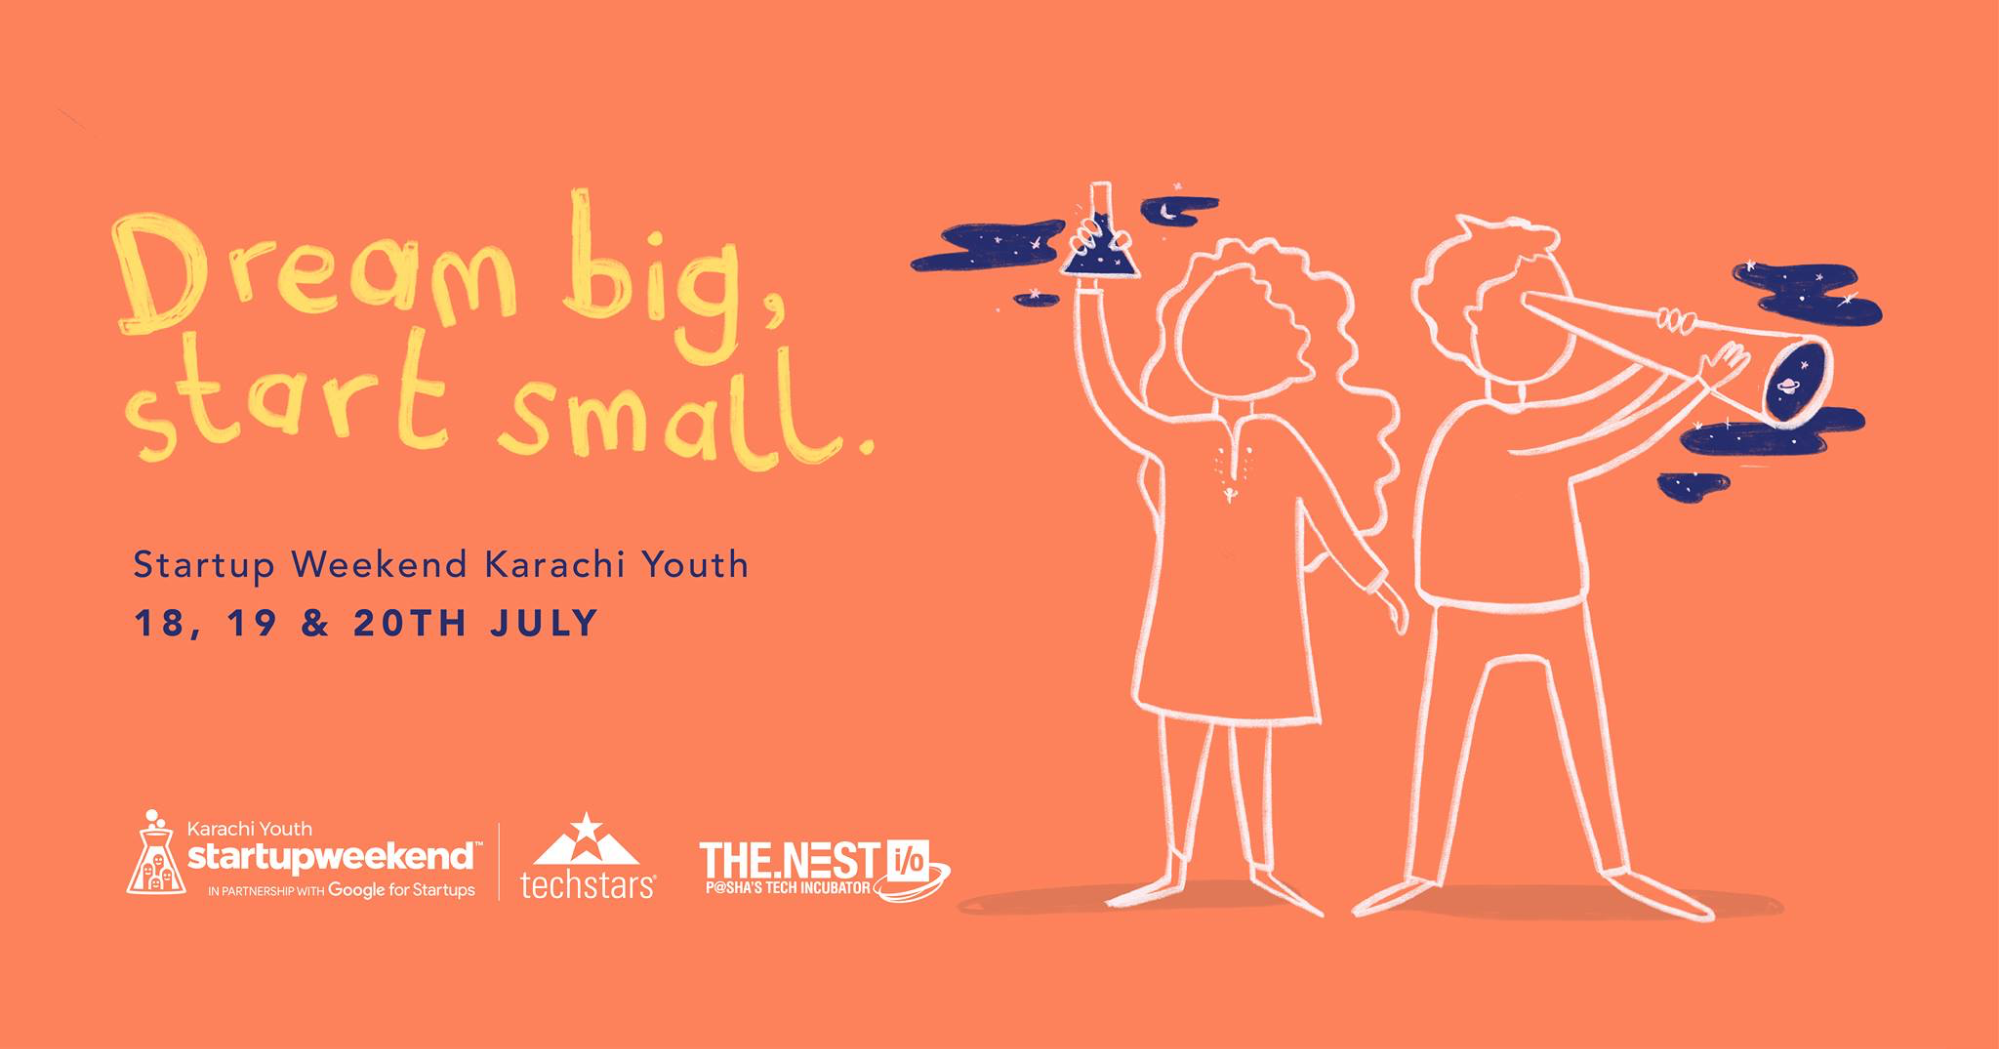 Startup Weekend Karachi Youth Nest I/O